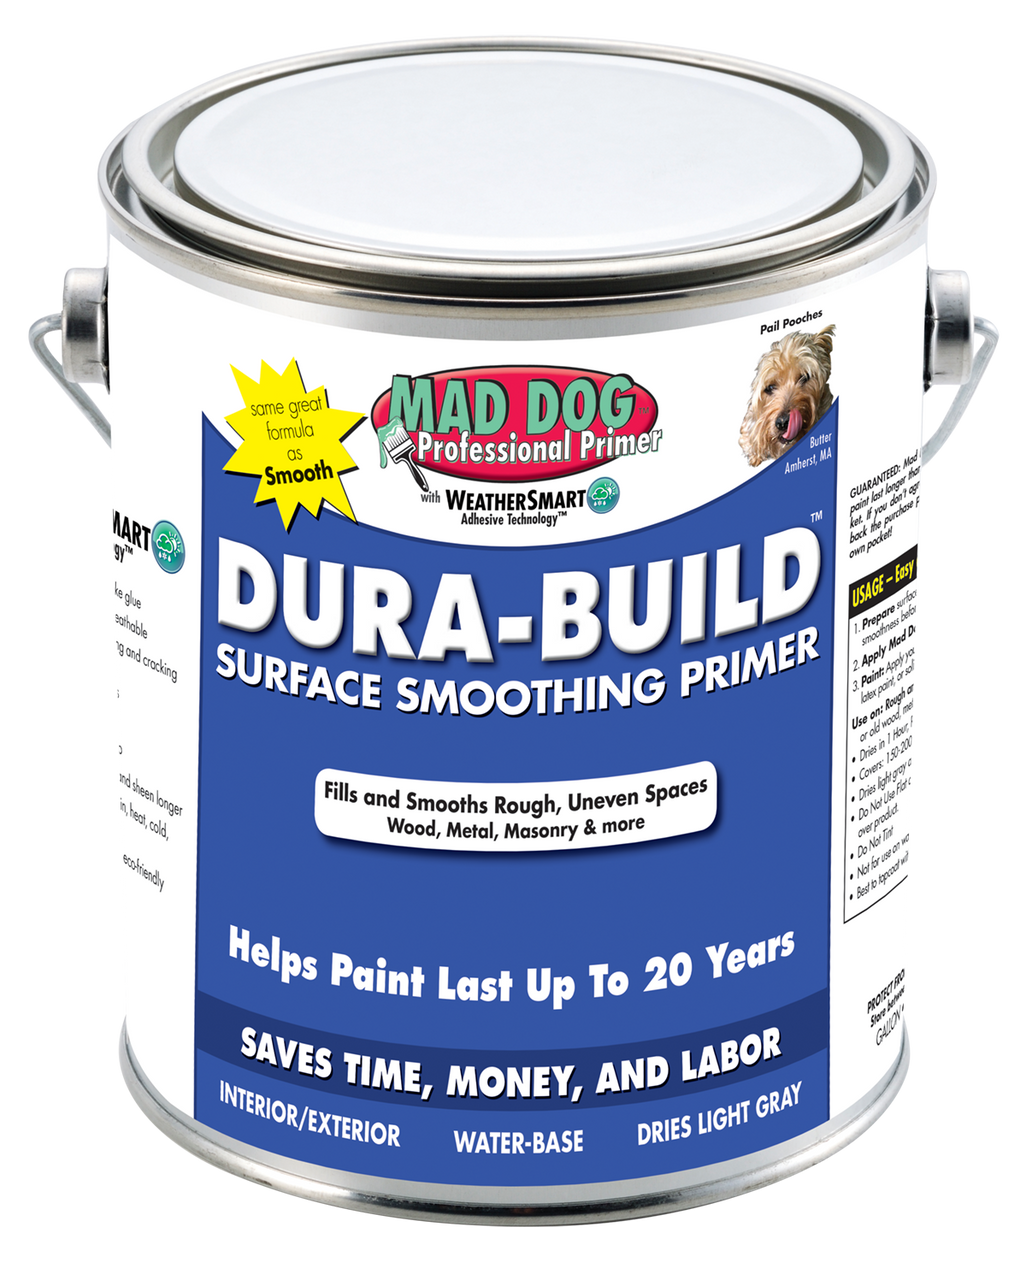 Mad Dog Dura-Build: Surface Smoothing Primer